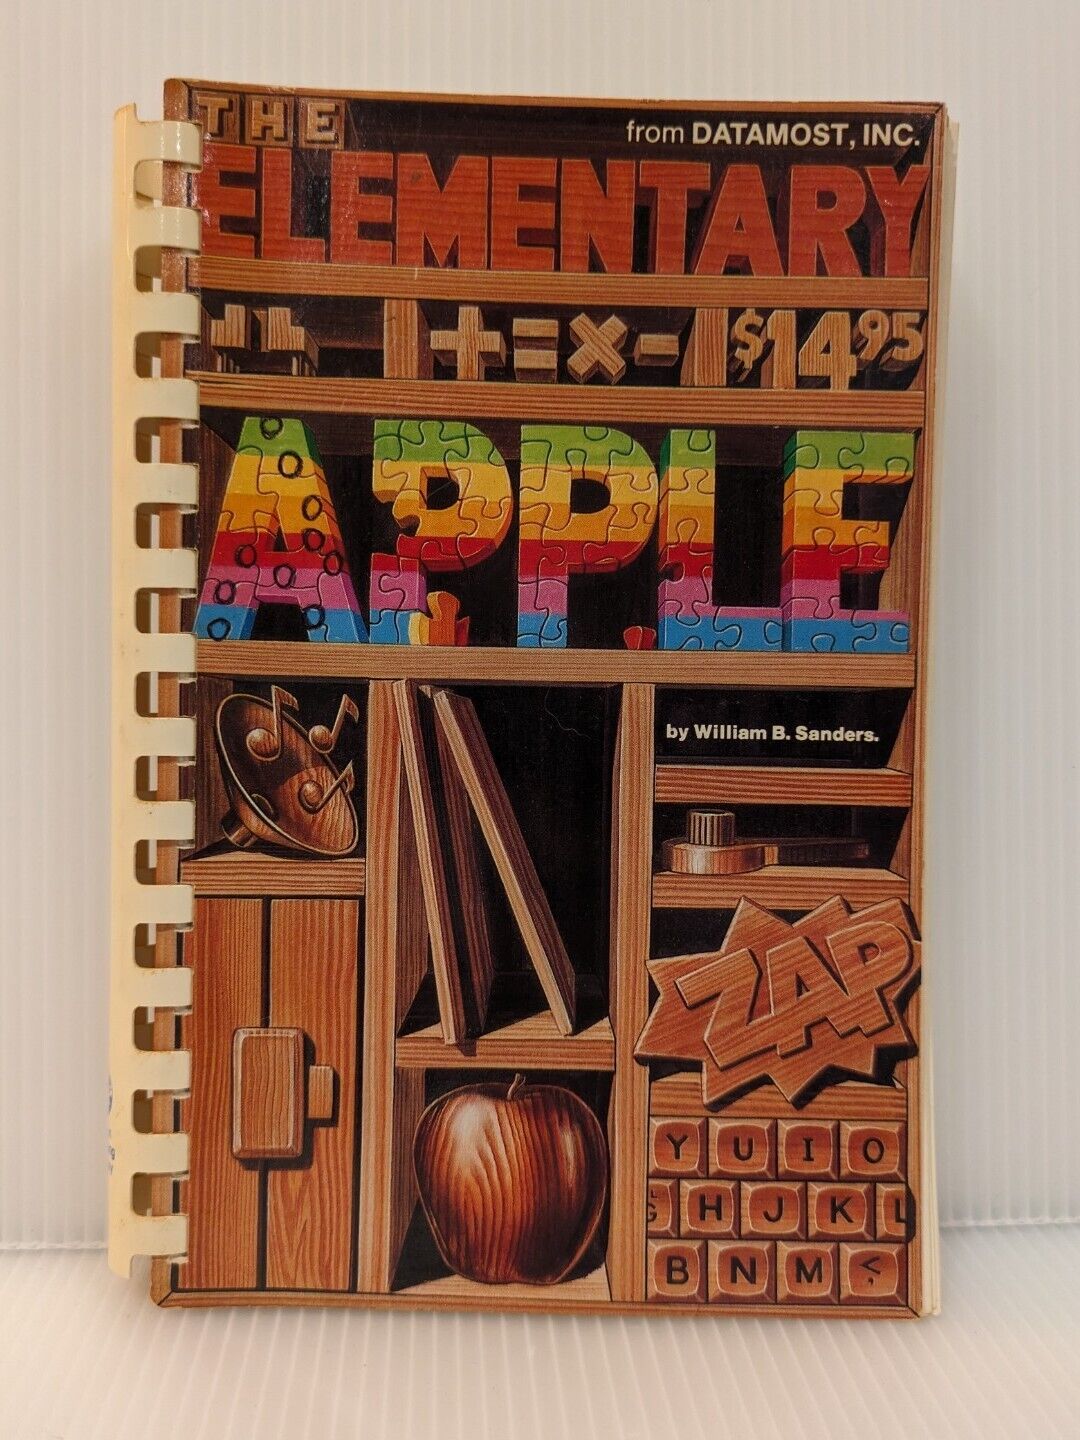 VINTAGE 1983 Spiral Bound The Elementary Apple Datamost, William B. Sanders RARE